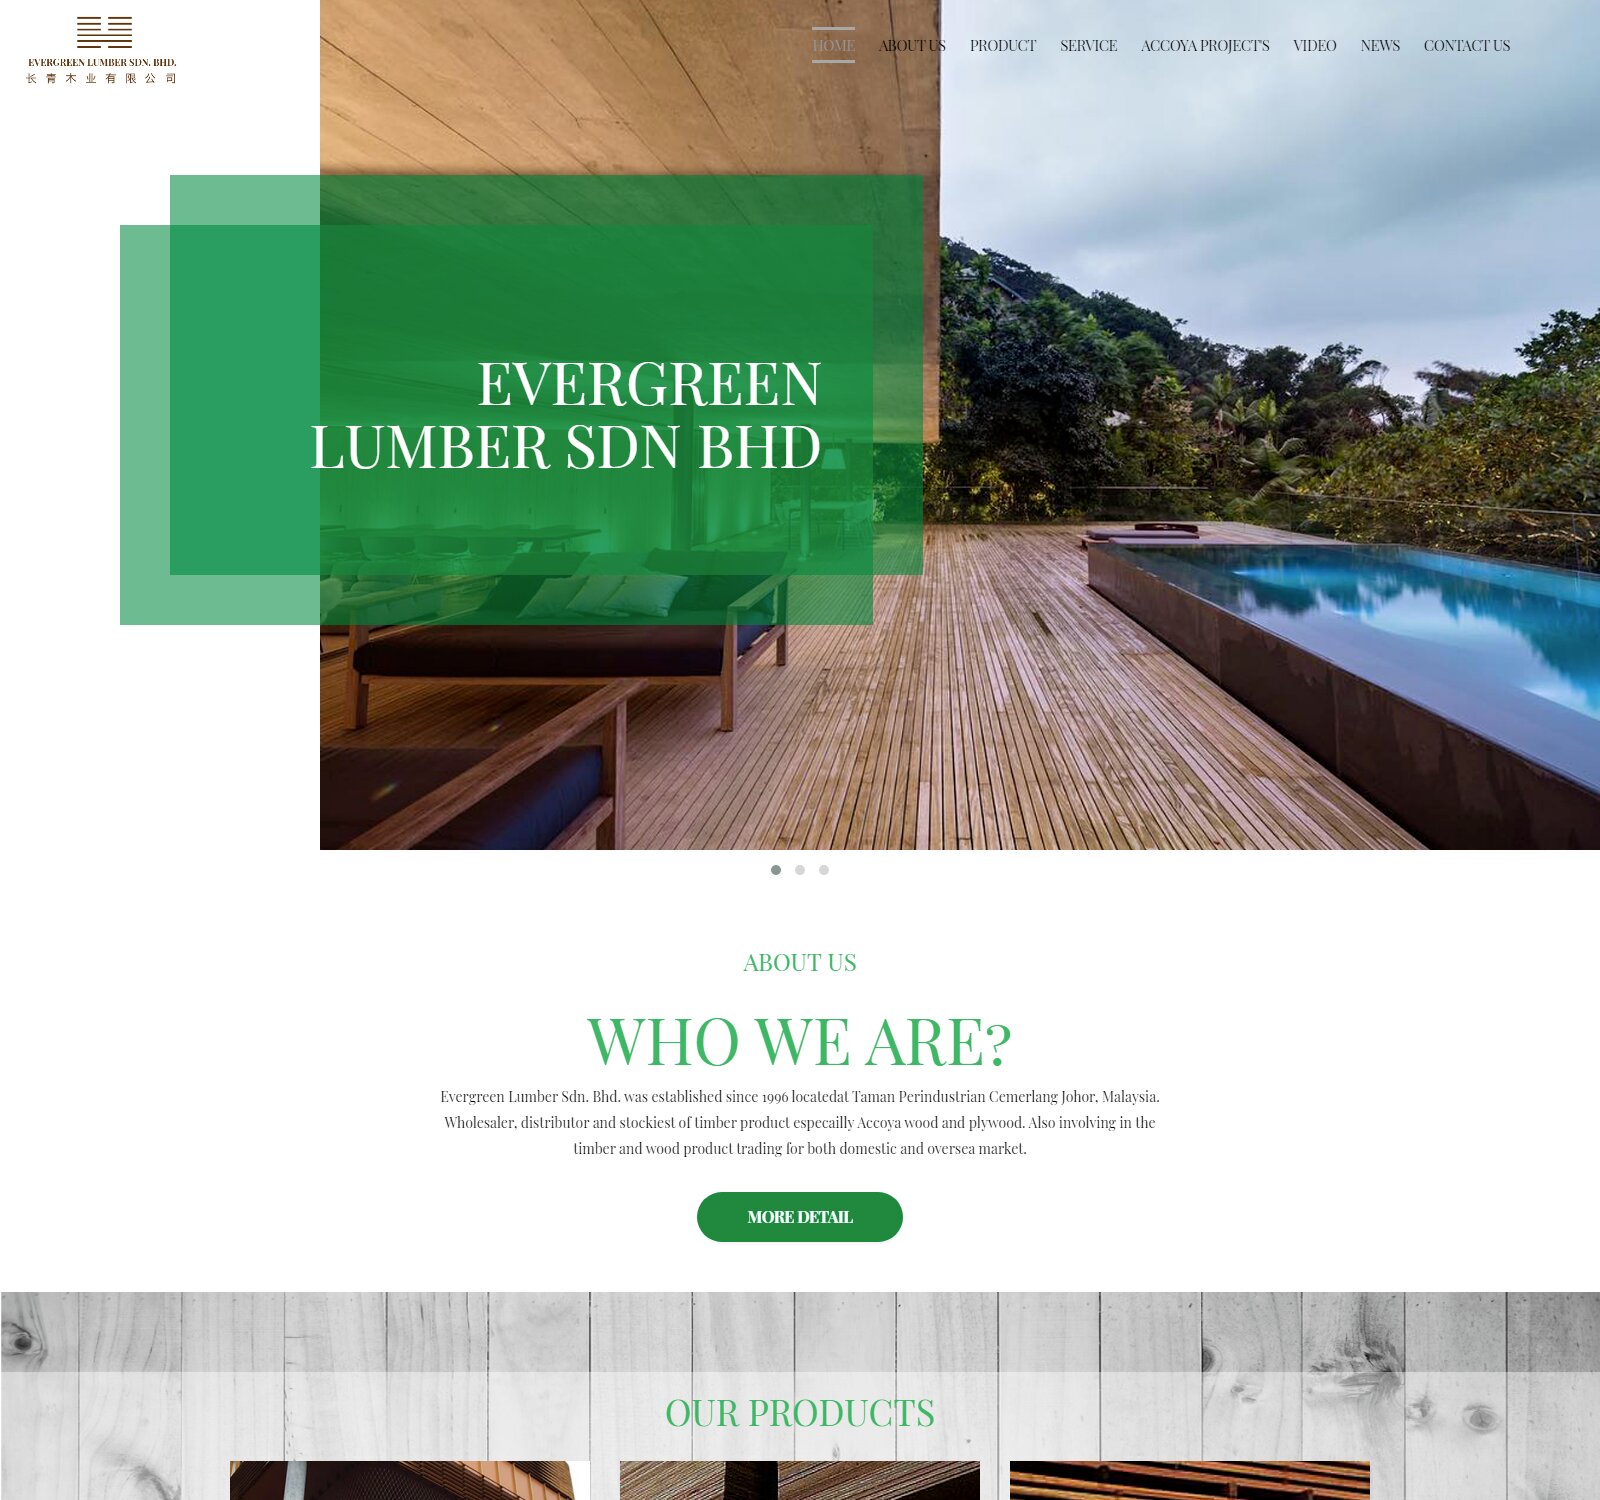 Evergreen Lumber Sdn Bhd